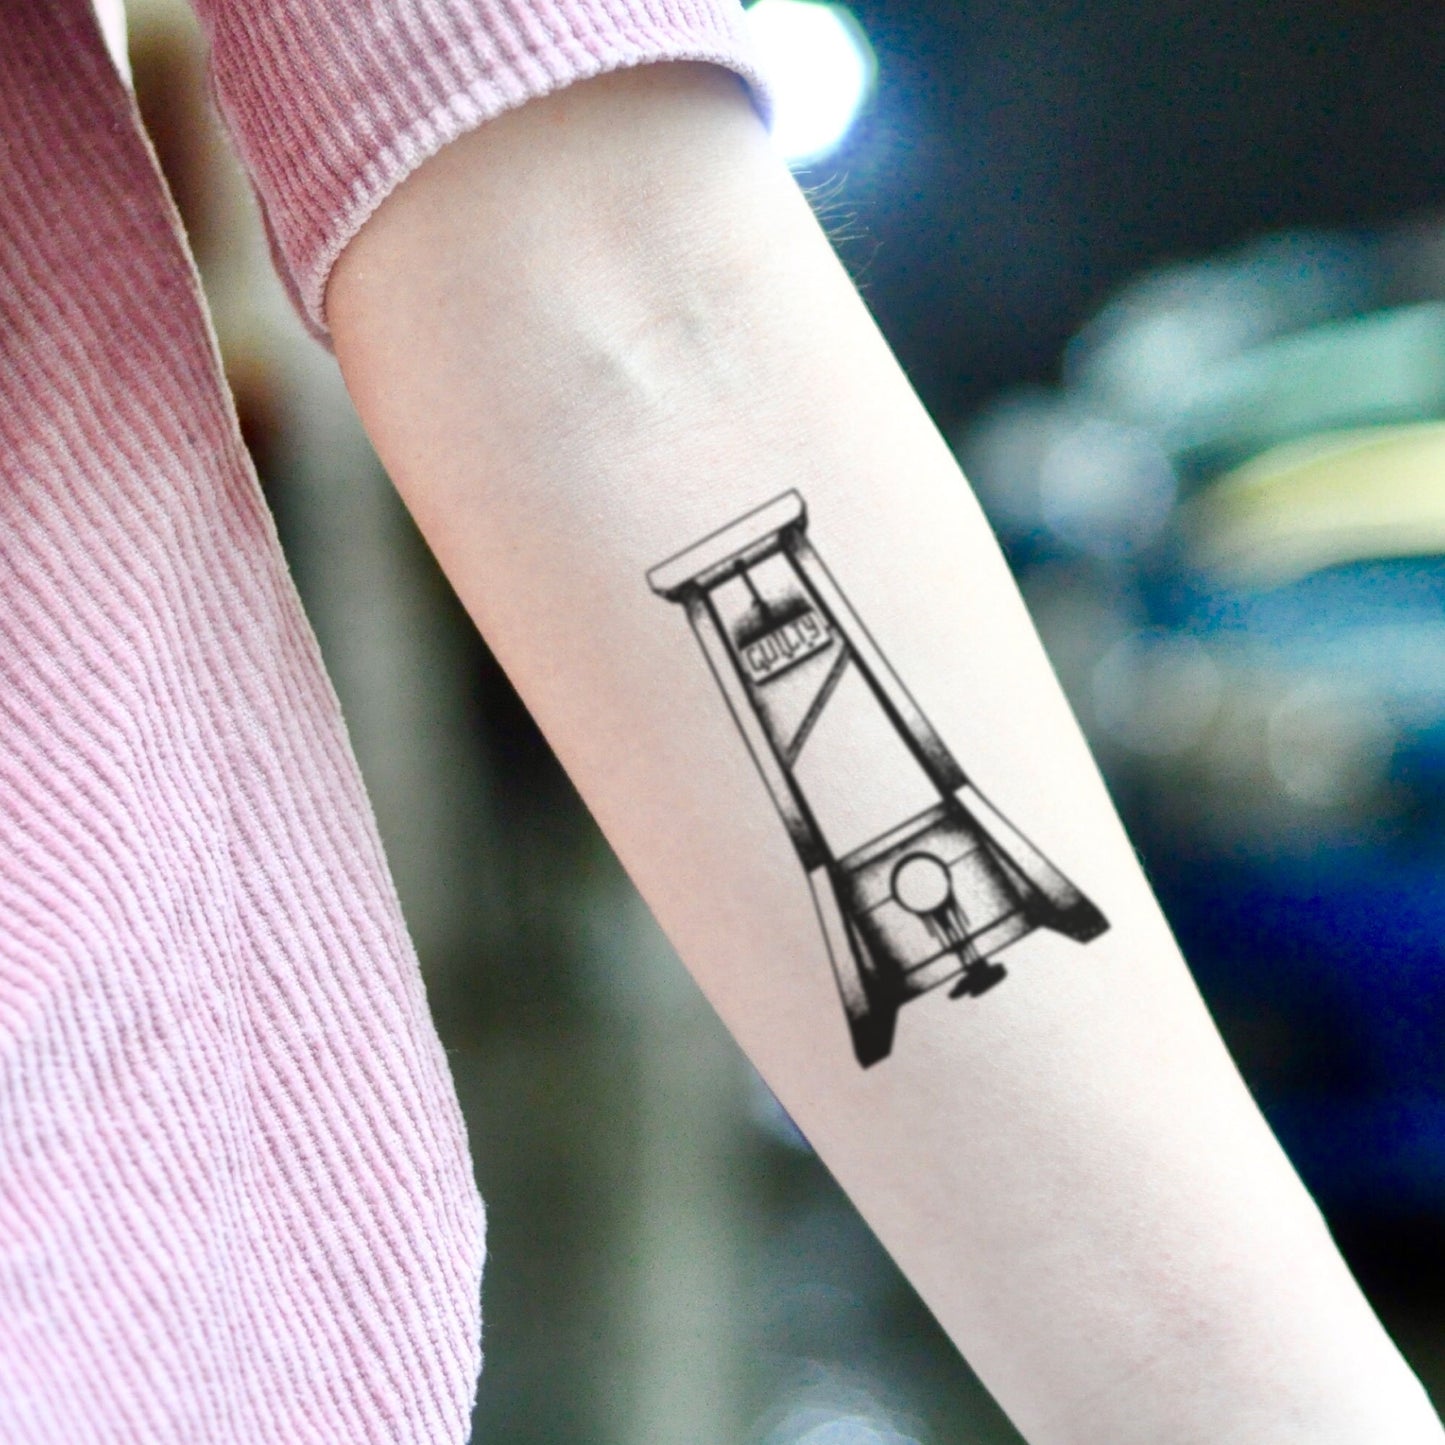 fake medium guillotine illustrative temporary tattoo sticker design idea on inner arm